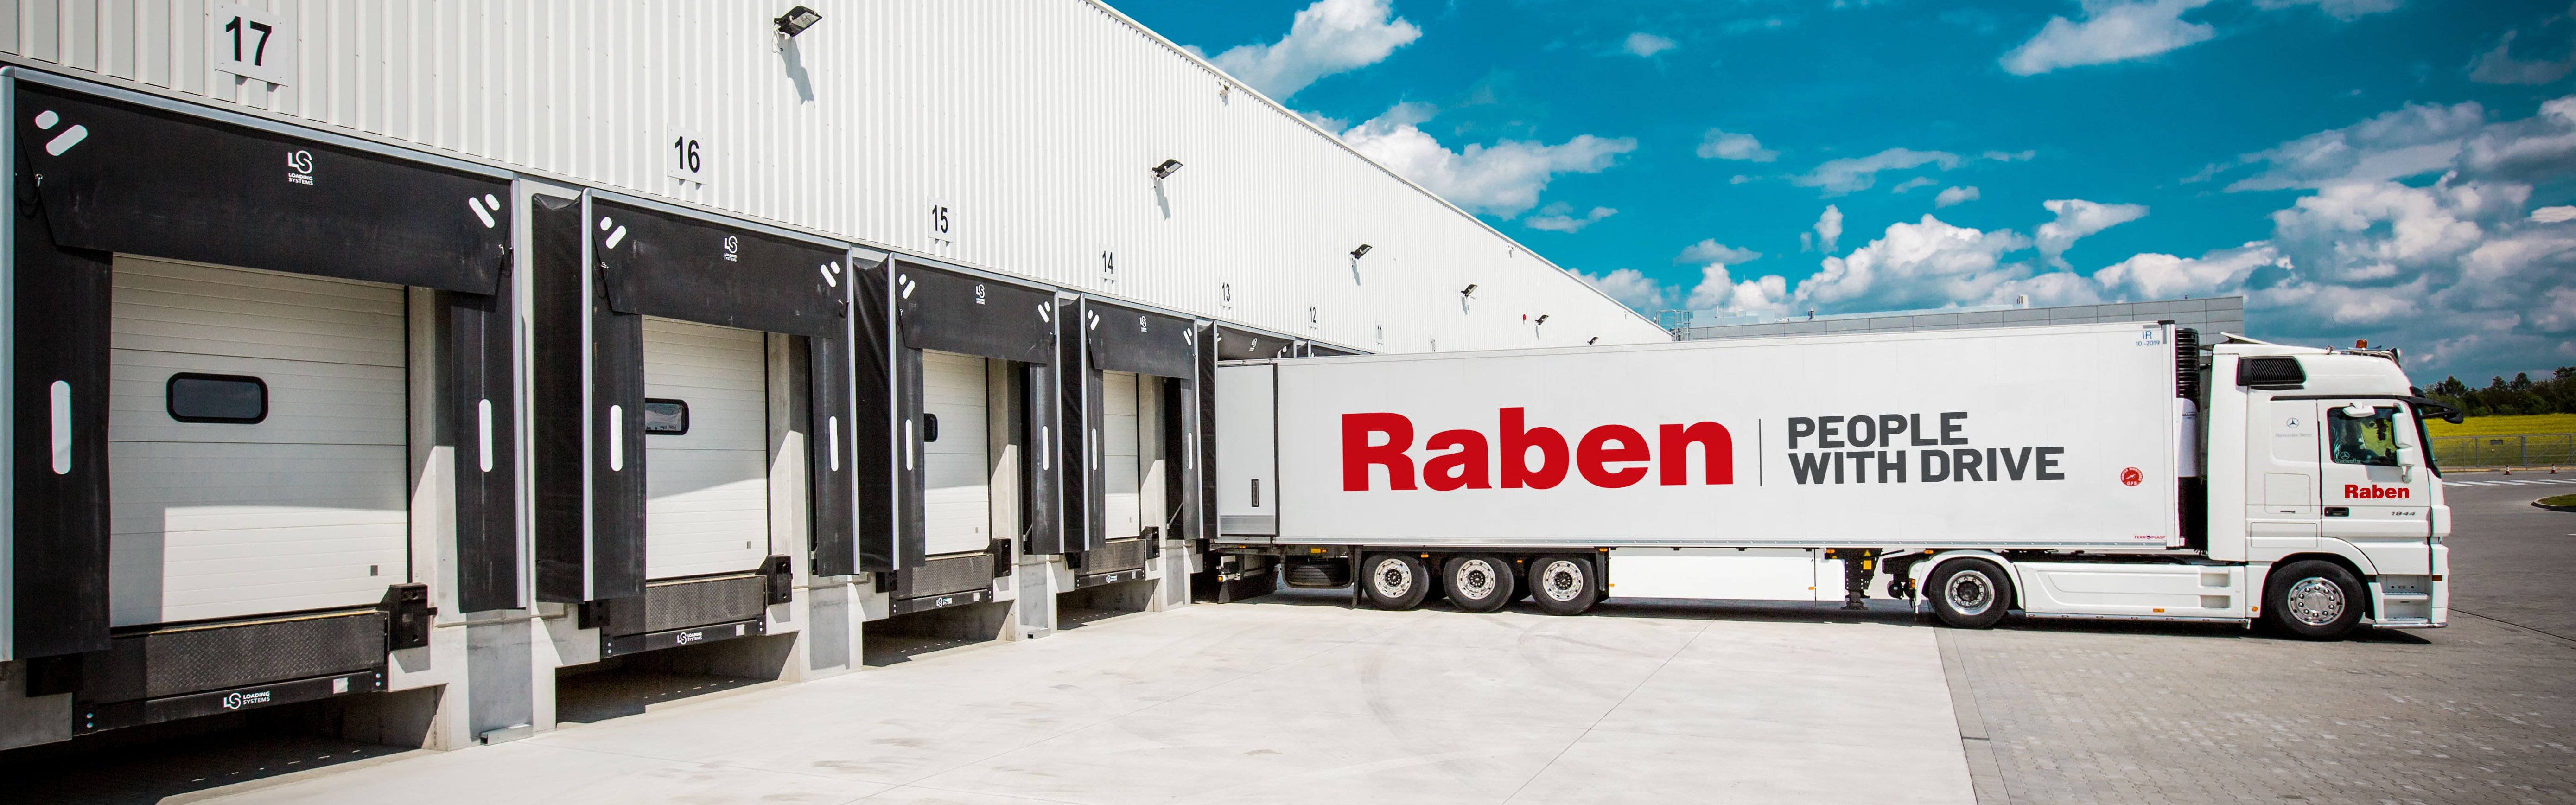 Csm Raben Long Truck New Branding On Warehouse Place 1 Min 1301f14f01 